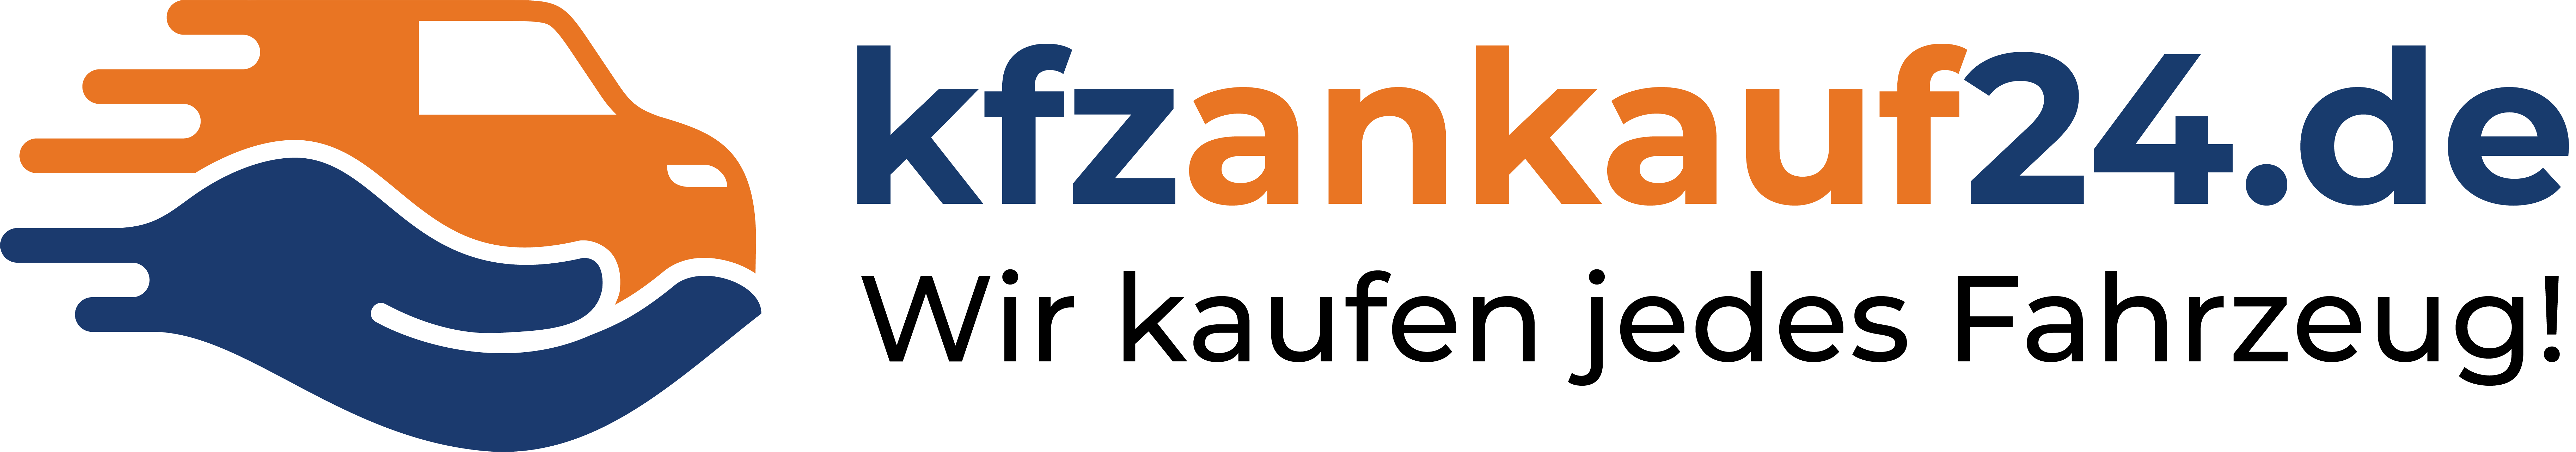 kfzankauf24.de Logo